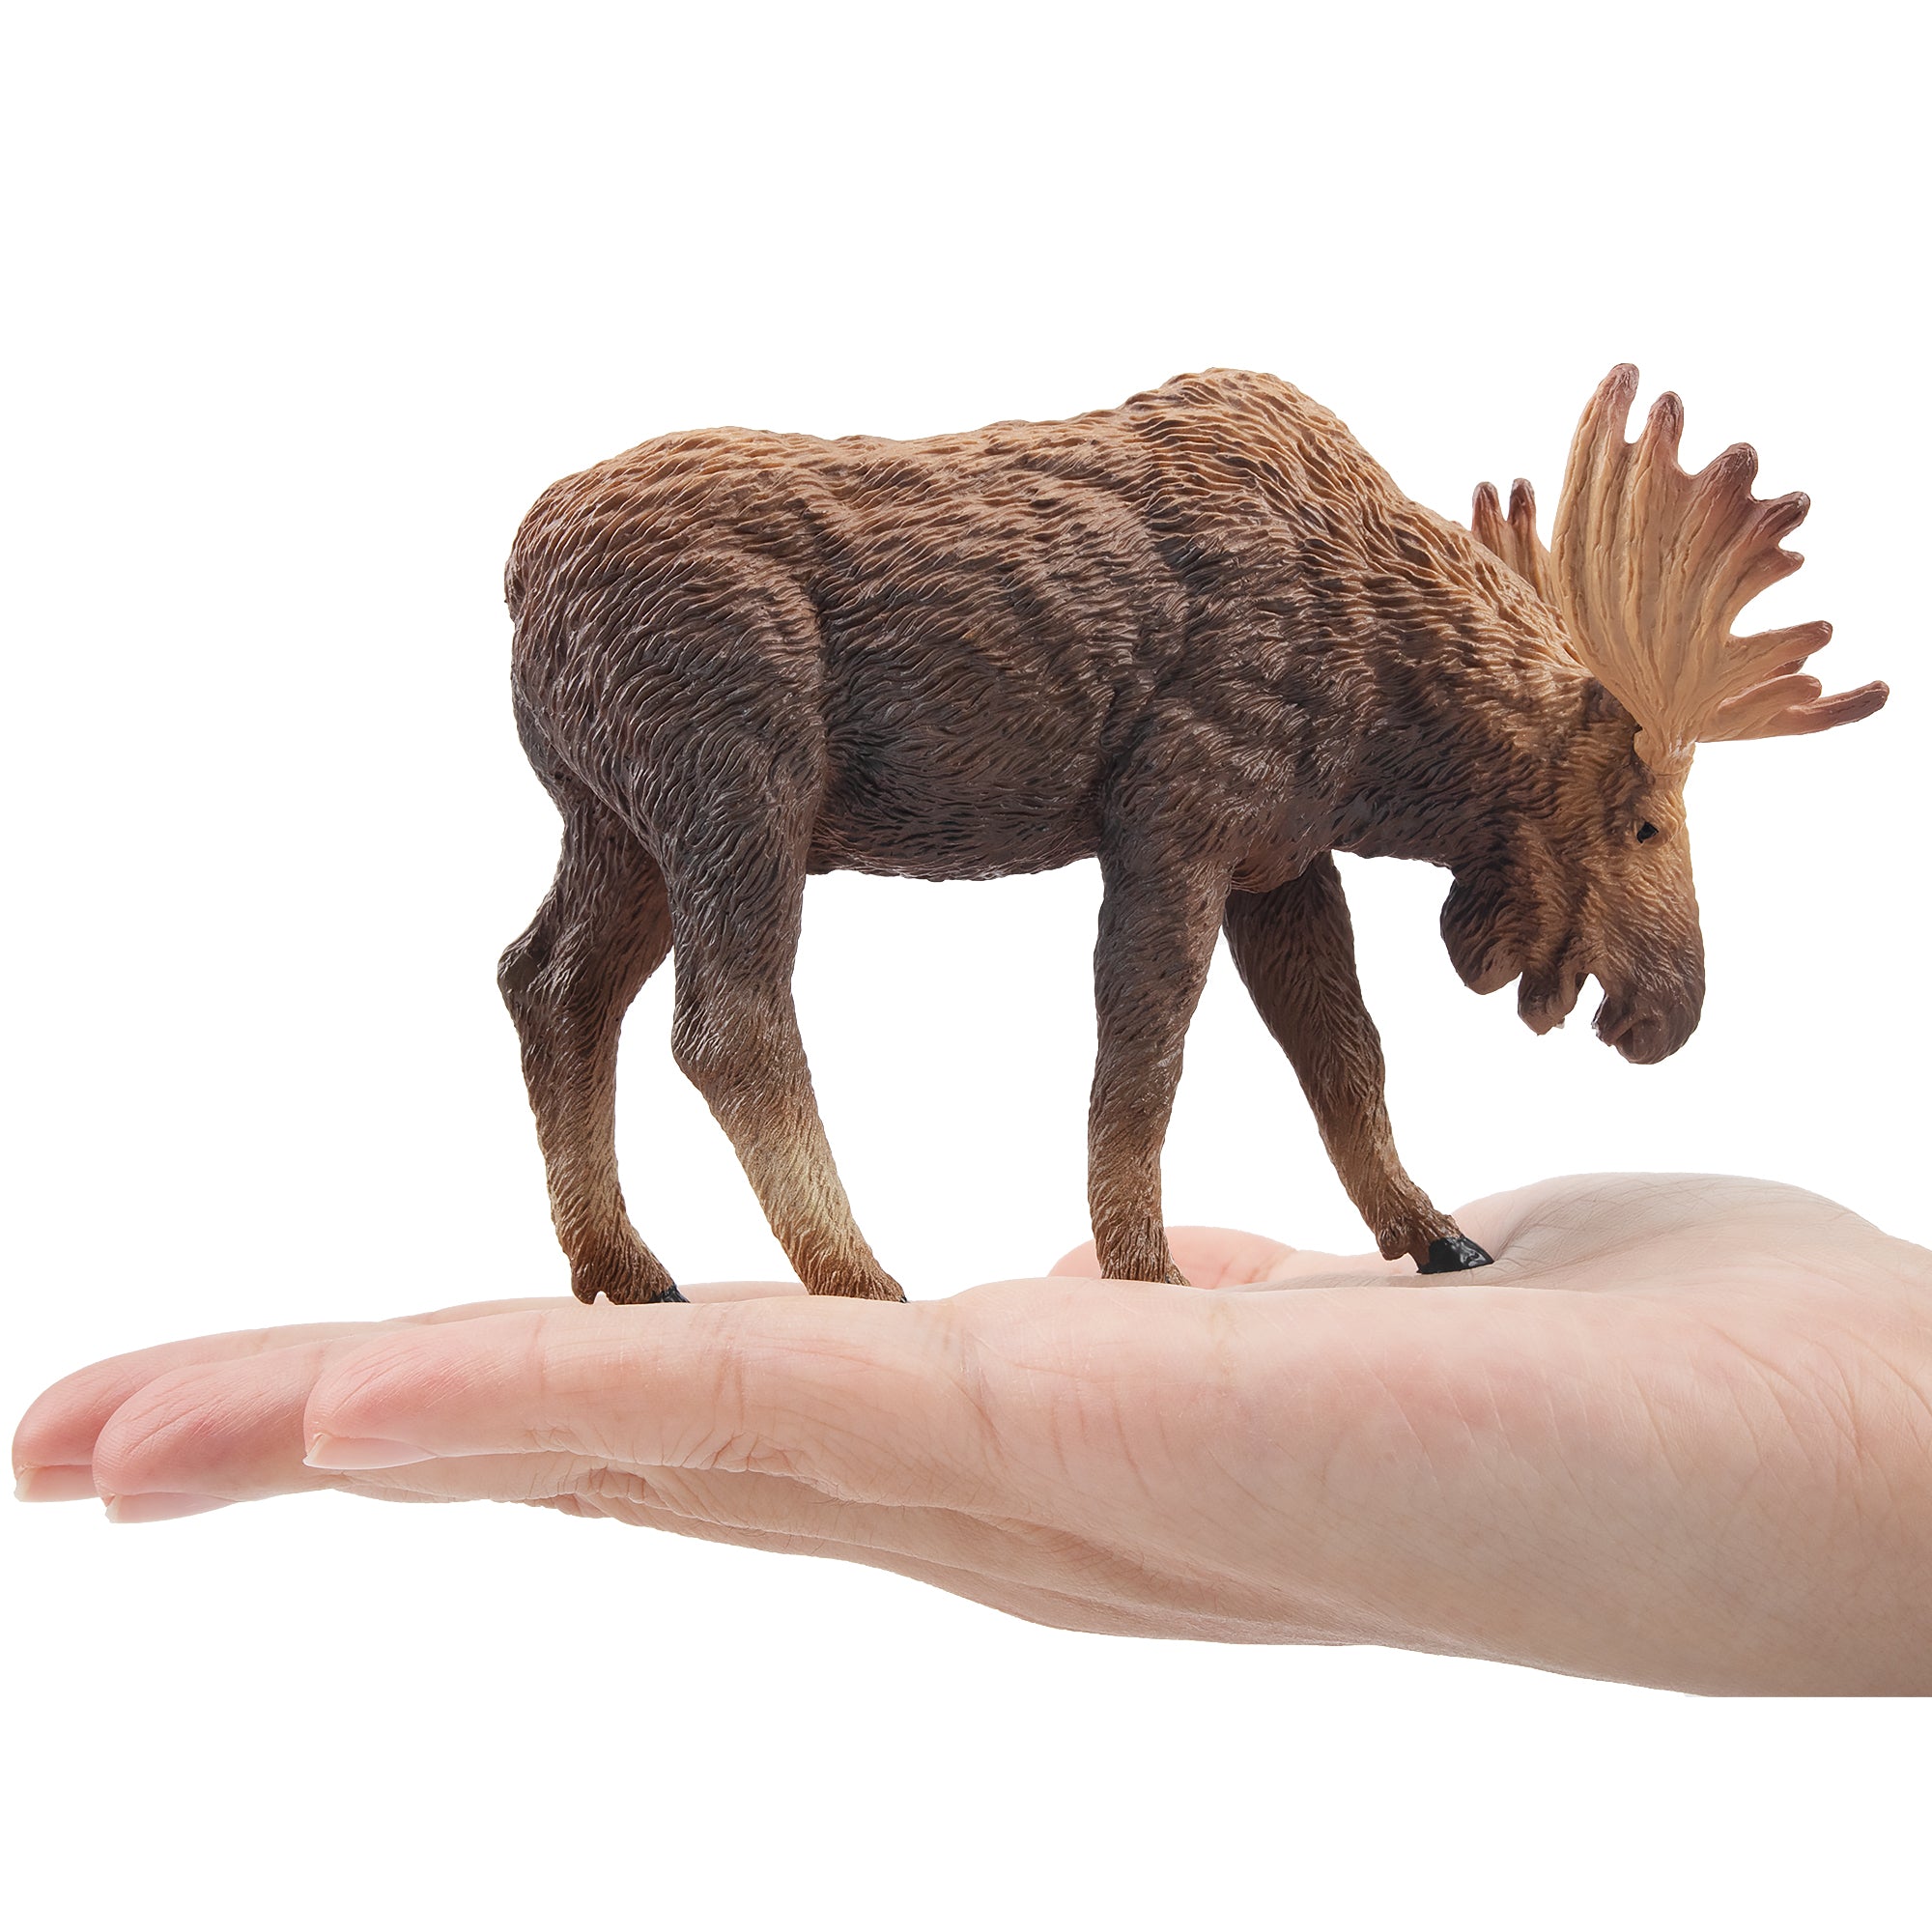 Toymany Moose Figurine Toy-on hand